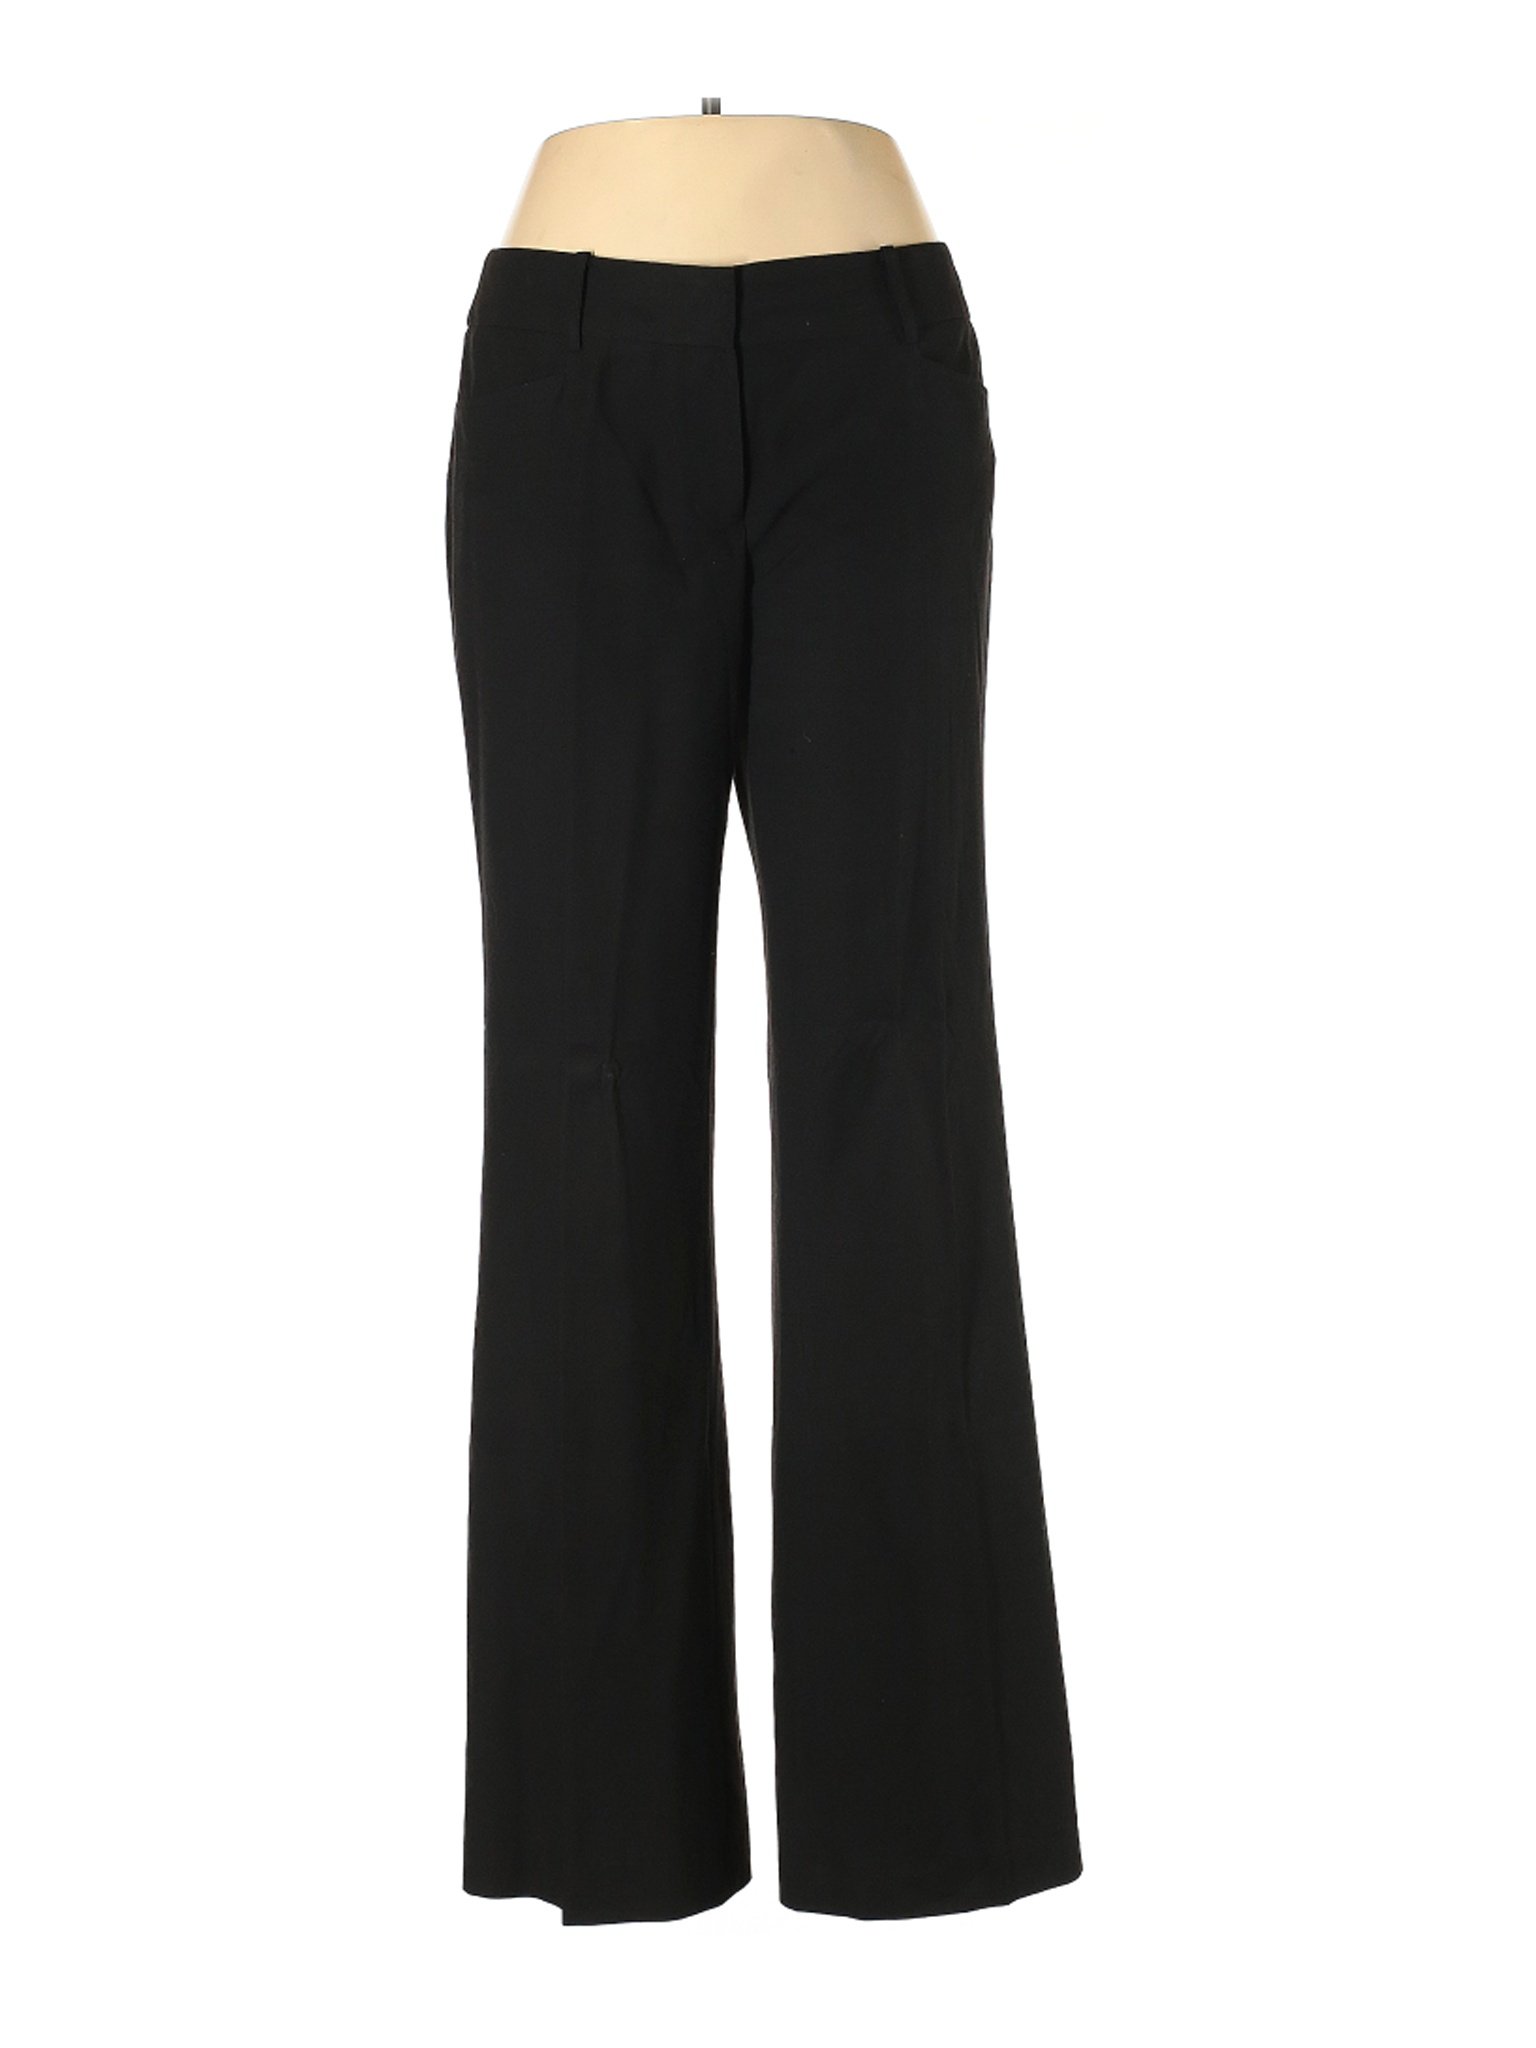 MICHAEL Michael Kors Women Black Dress Pants 10 | eBay